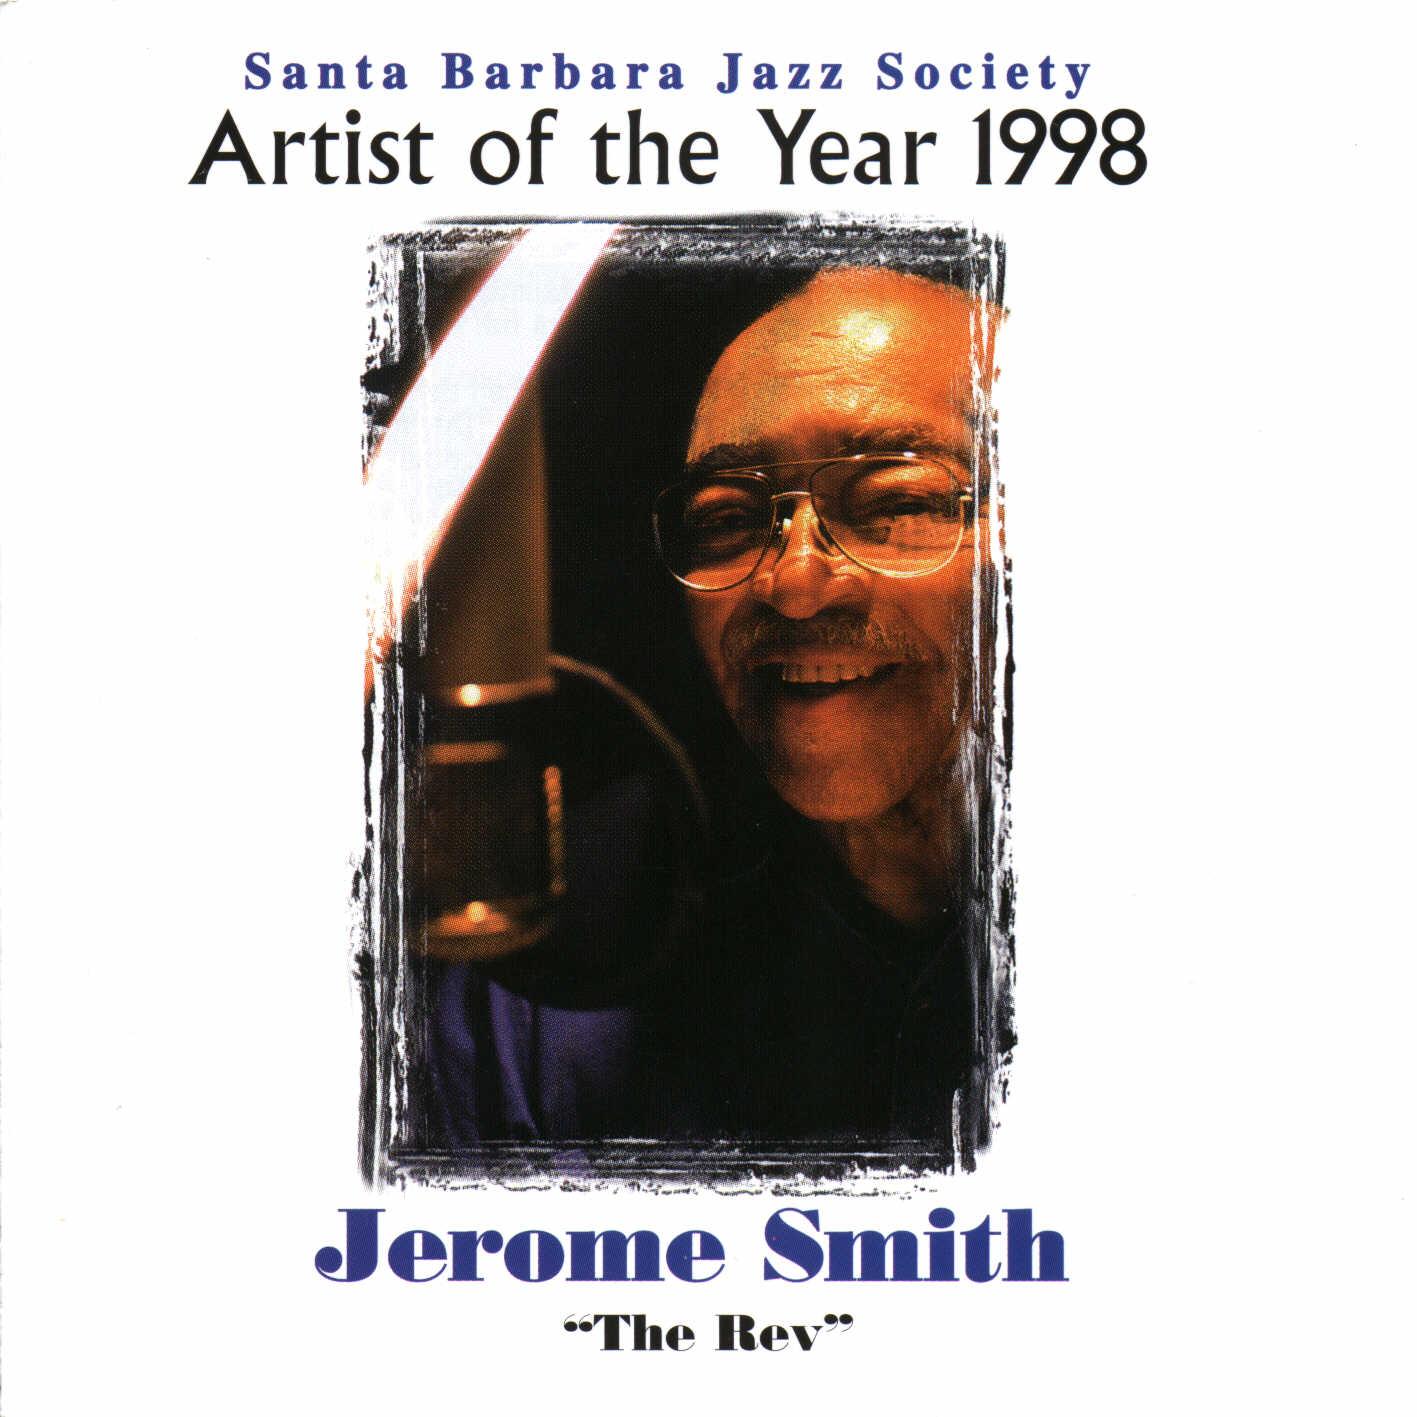 Jerome Smith CD cover.JPG (178313 bytes)